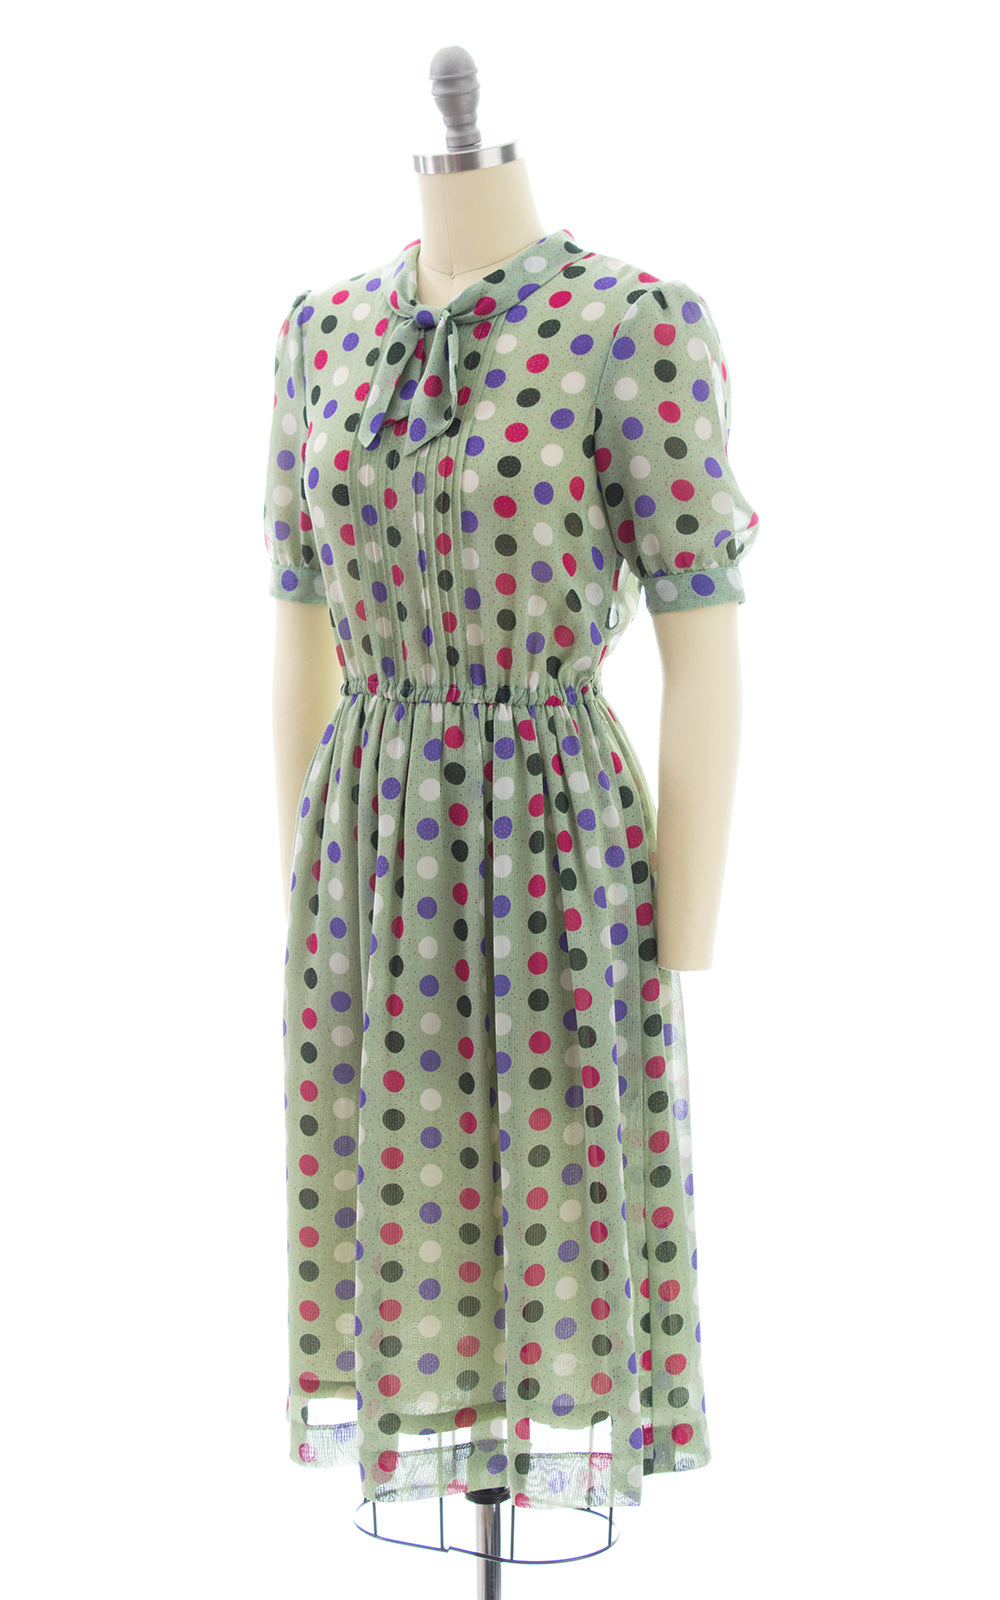 1980s Polka Dot Secretary Dress